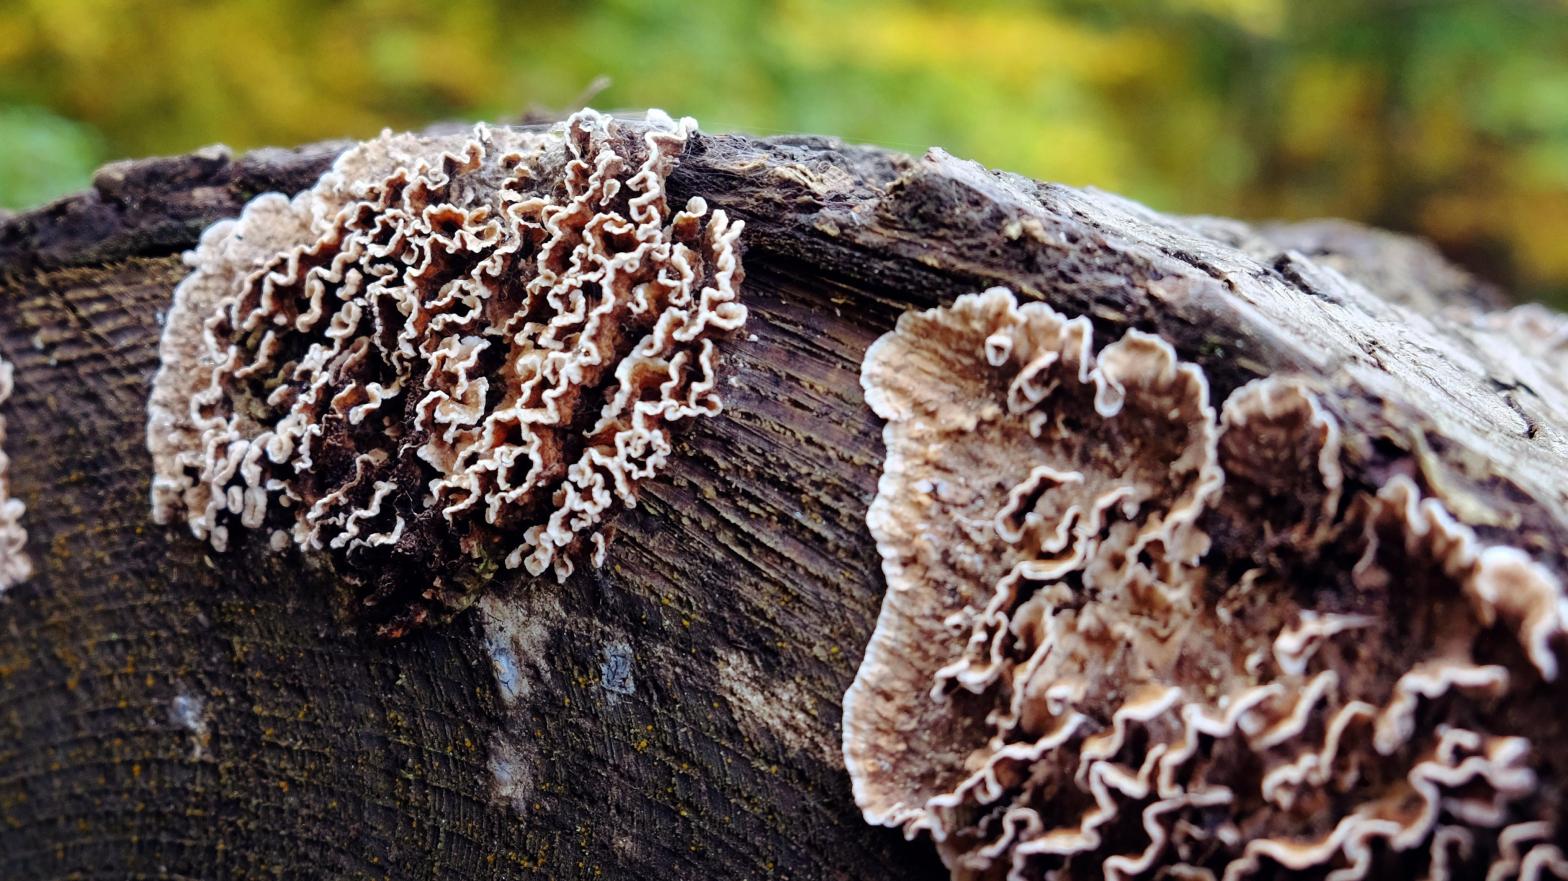 Silver leaf fungus on a dead tree stump in the UK. (Image: Alex Manders, Shutterstock)